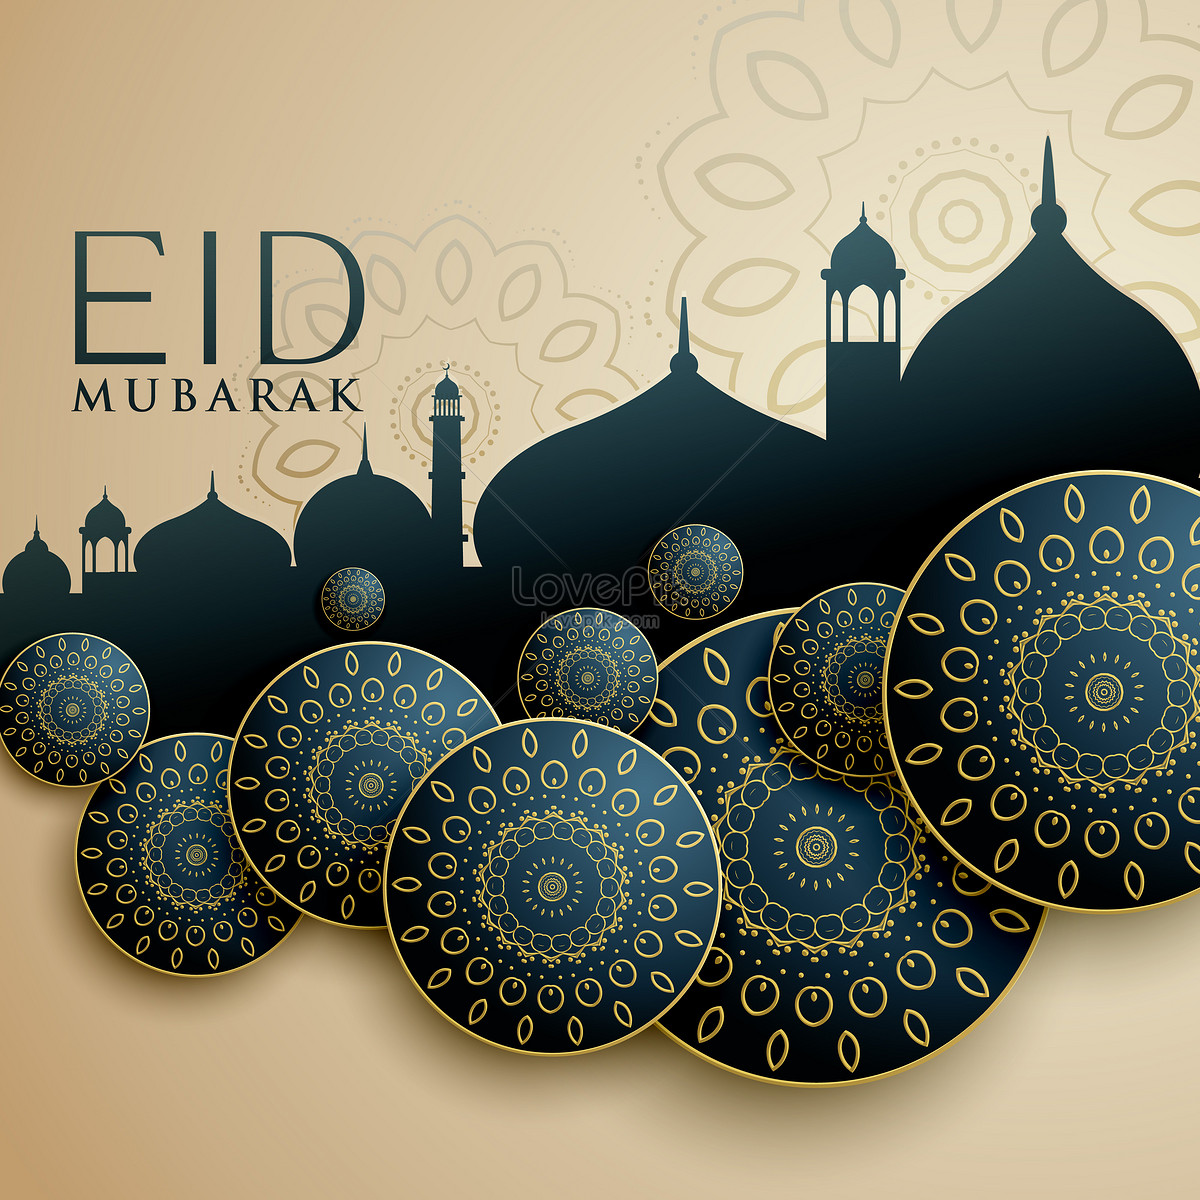 Eid mubarak background creative image_picture free download ...